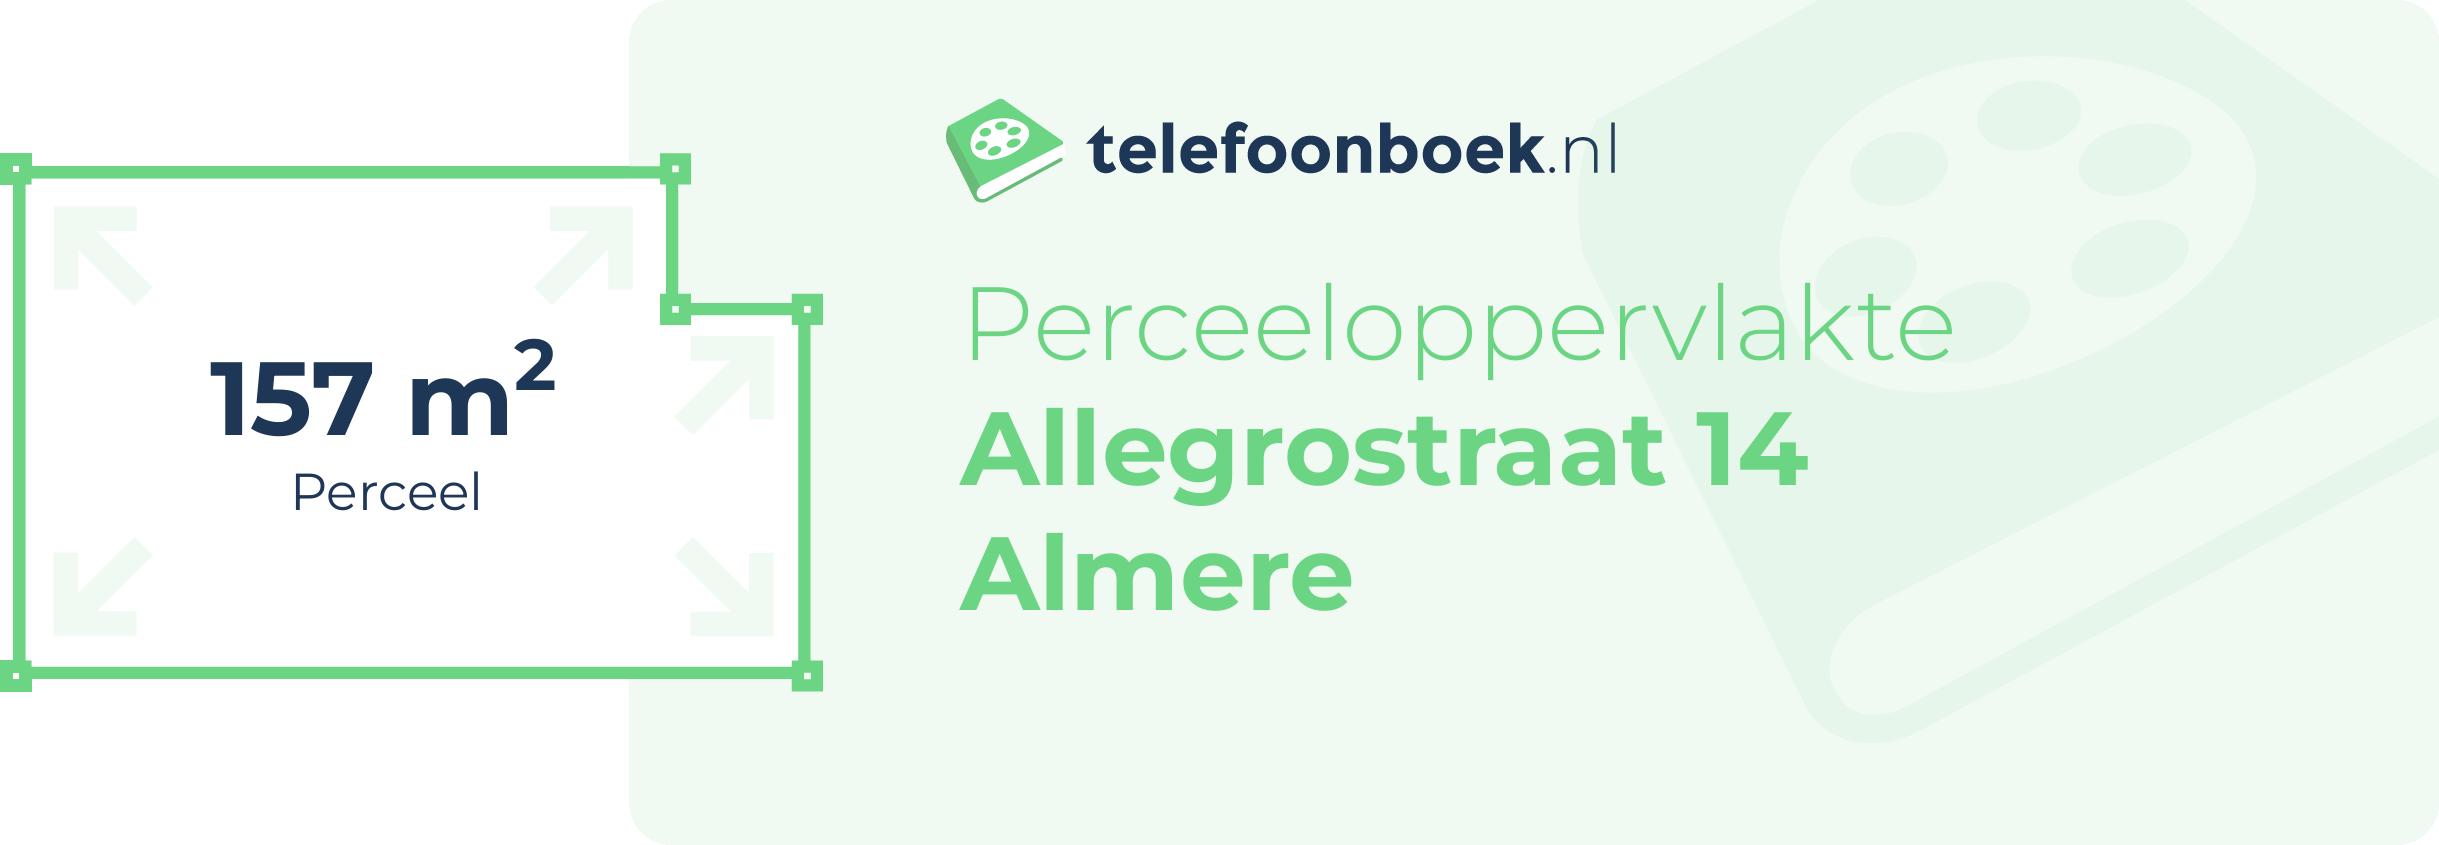 Perceeloppervlakte Allegrostraat 14 Almere